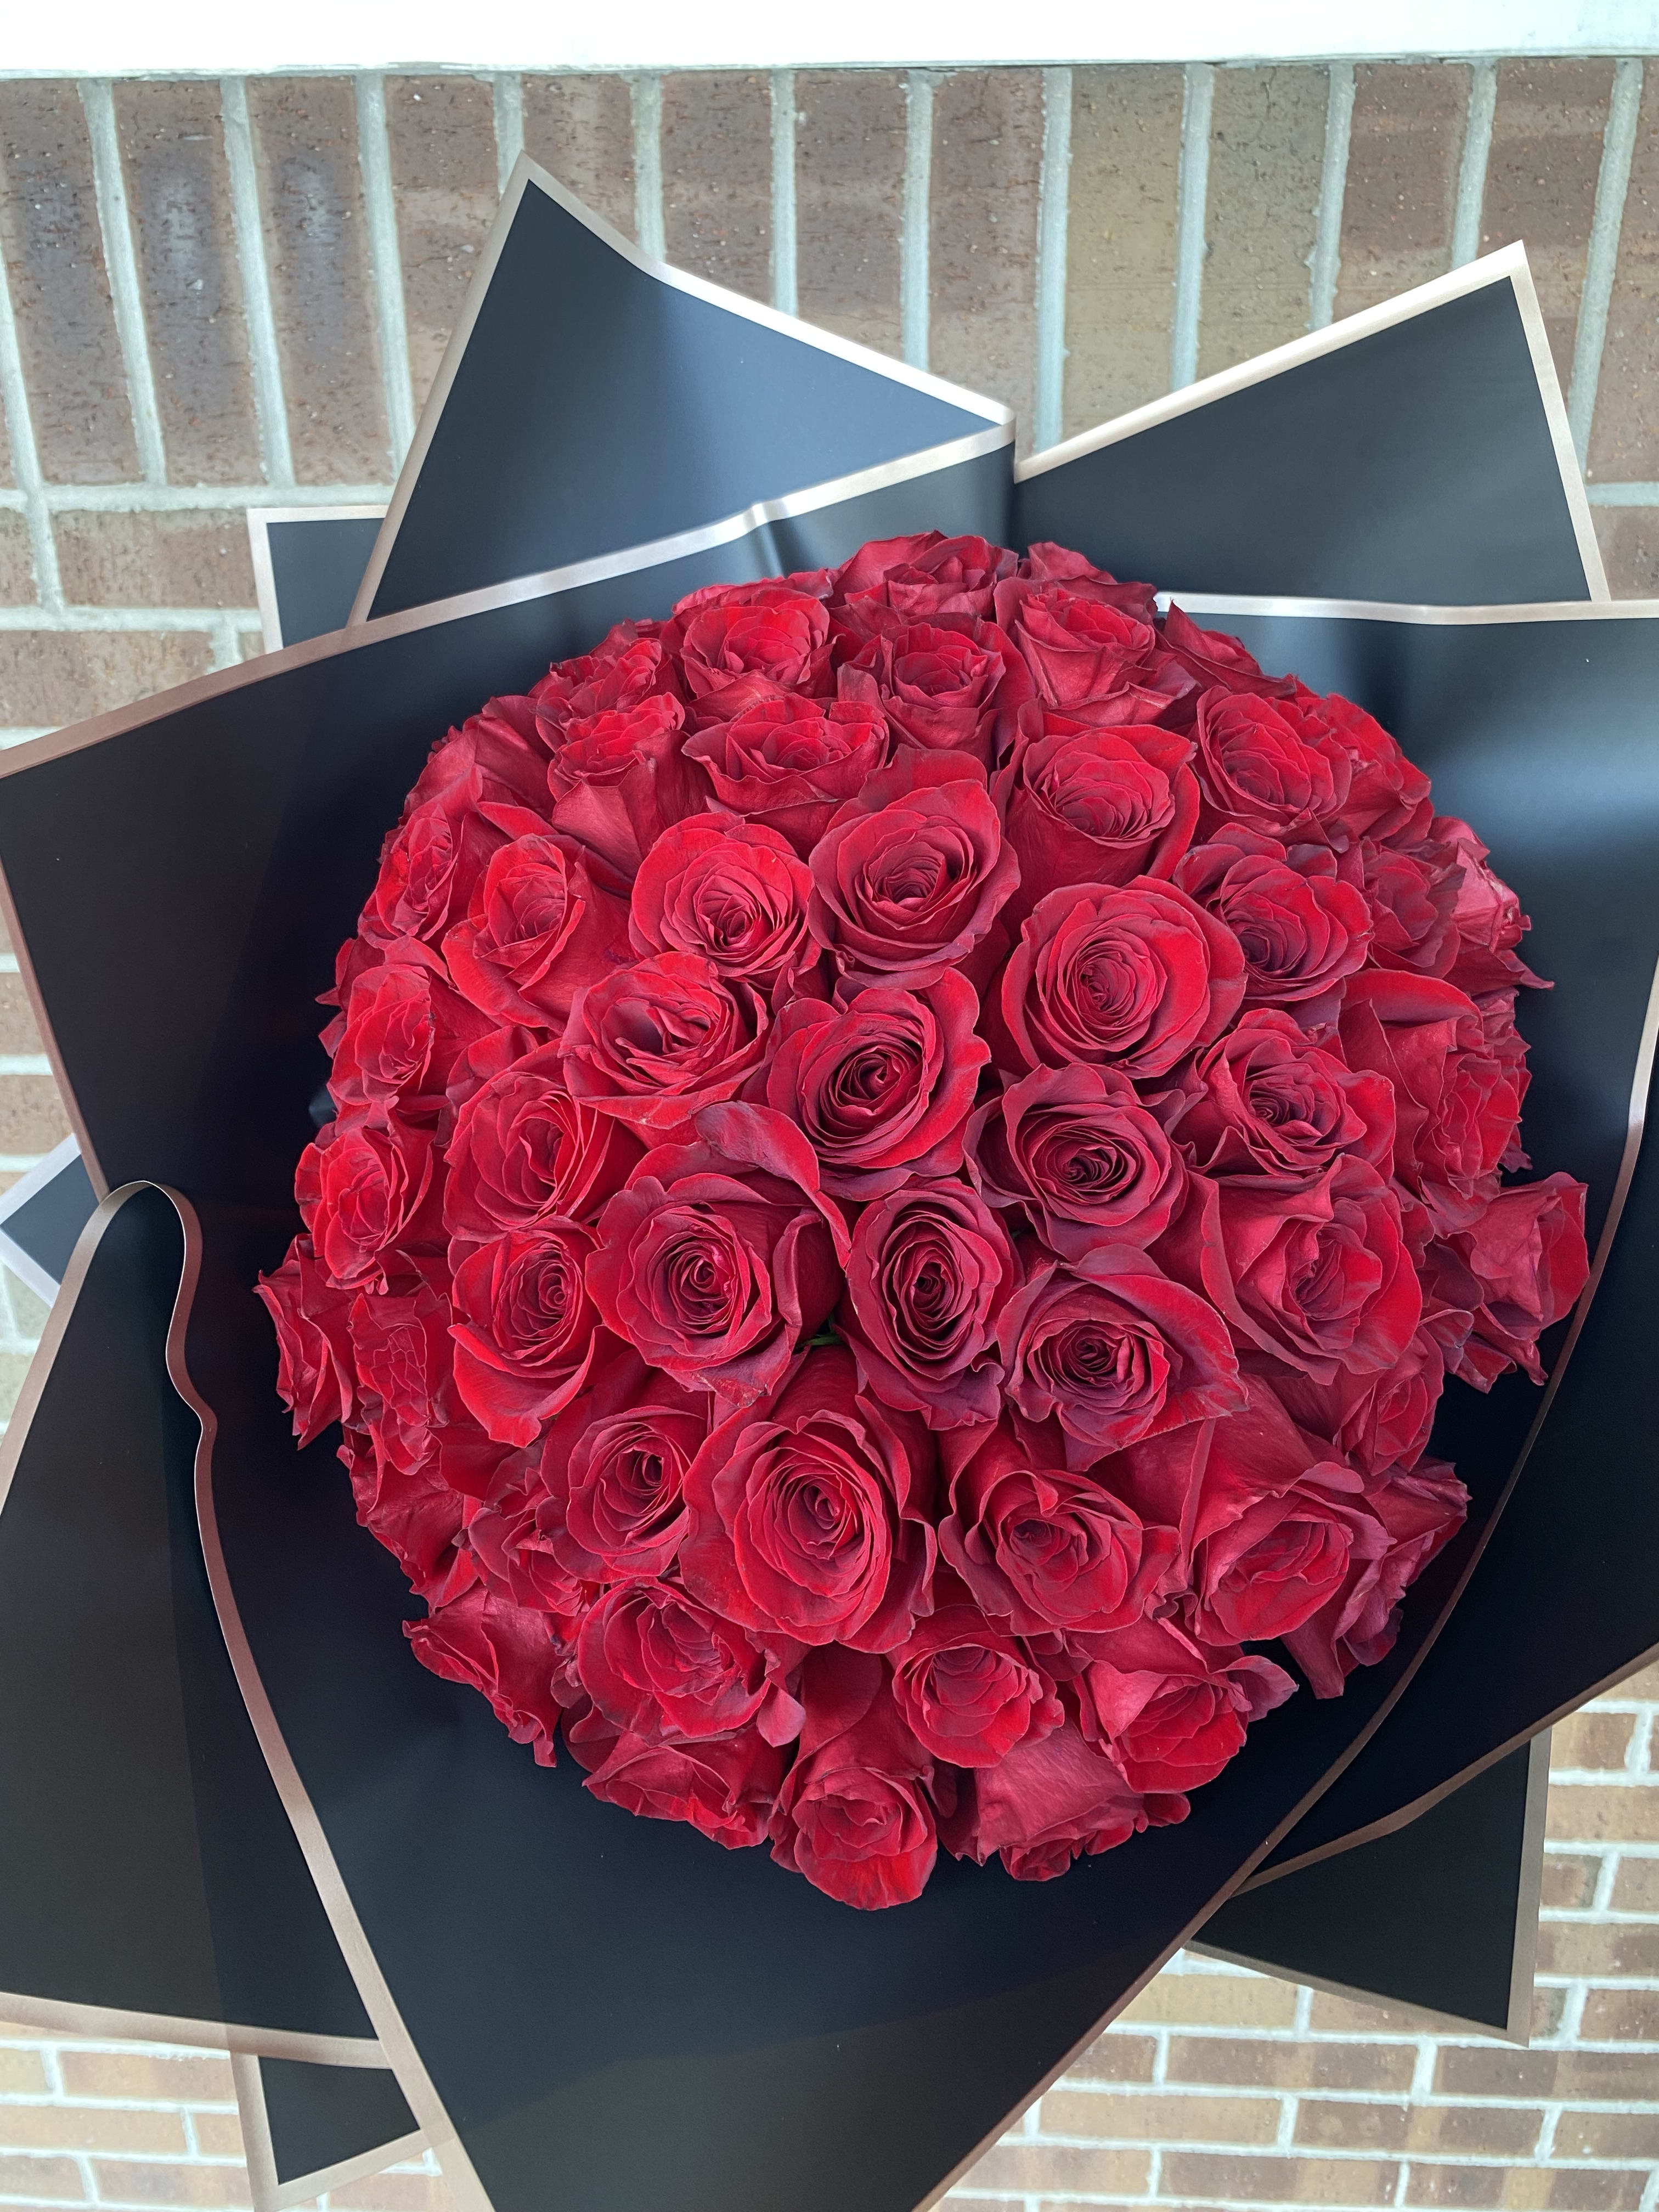 papir politik Mose 5 Dozen Red Rose Bouquet in Grand Prairie, TX | Vivid Flowers